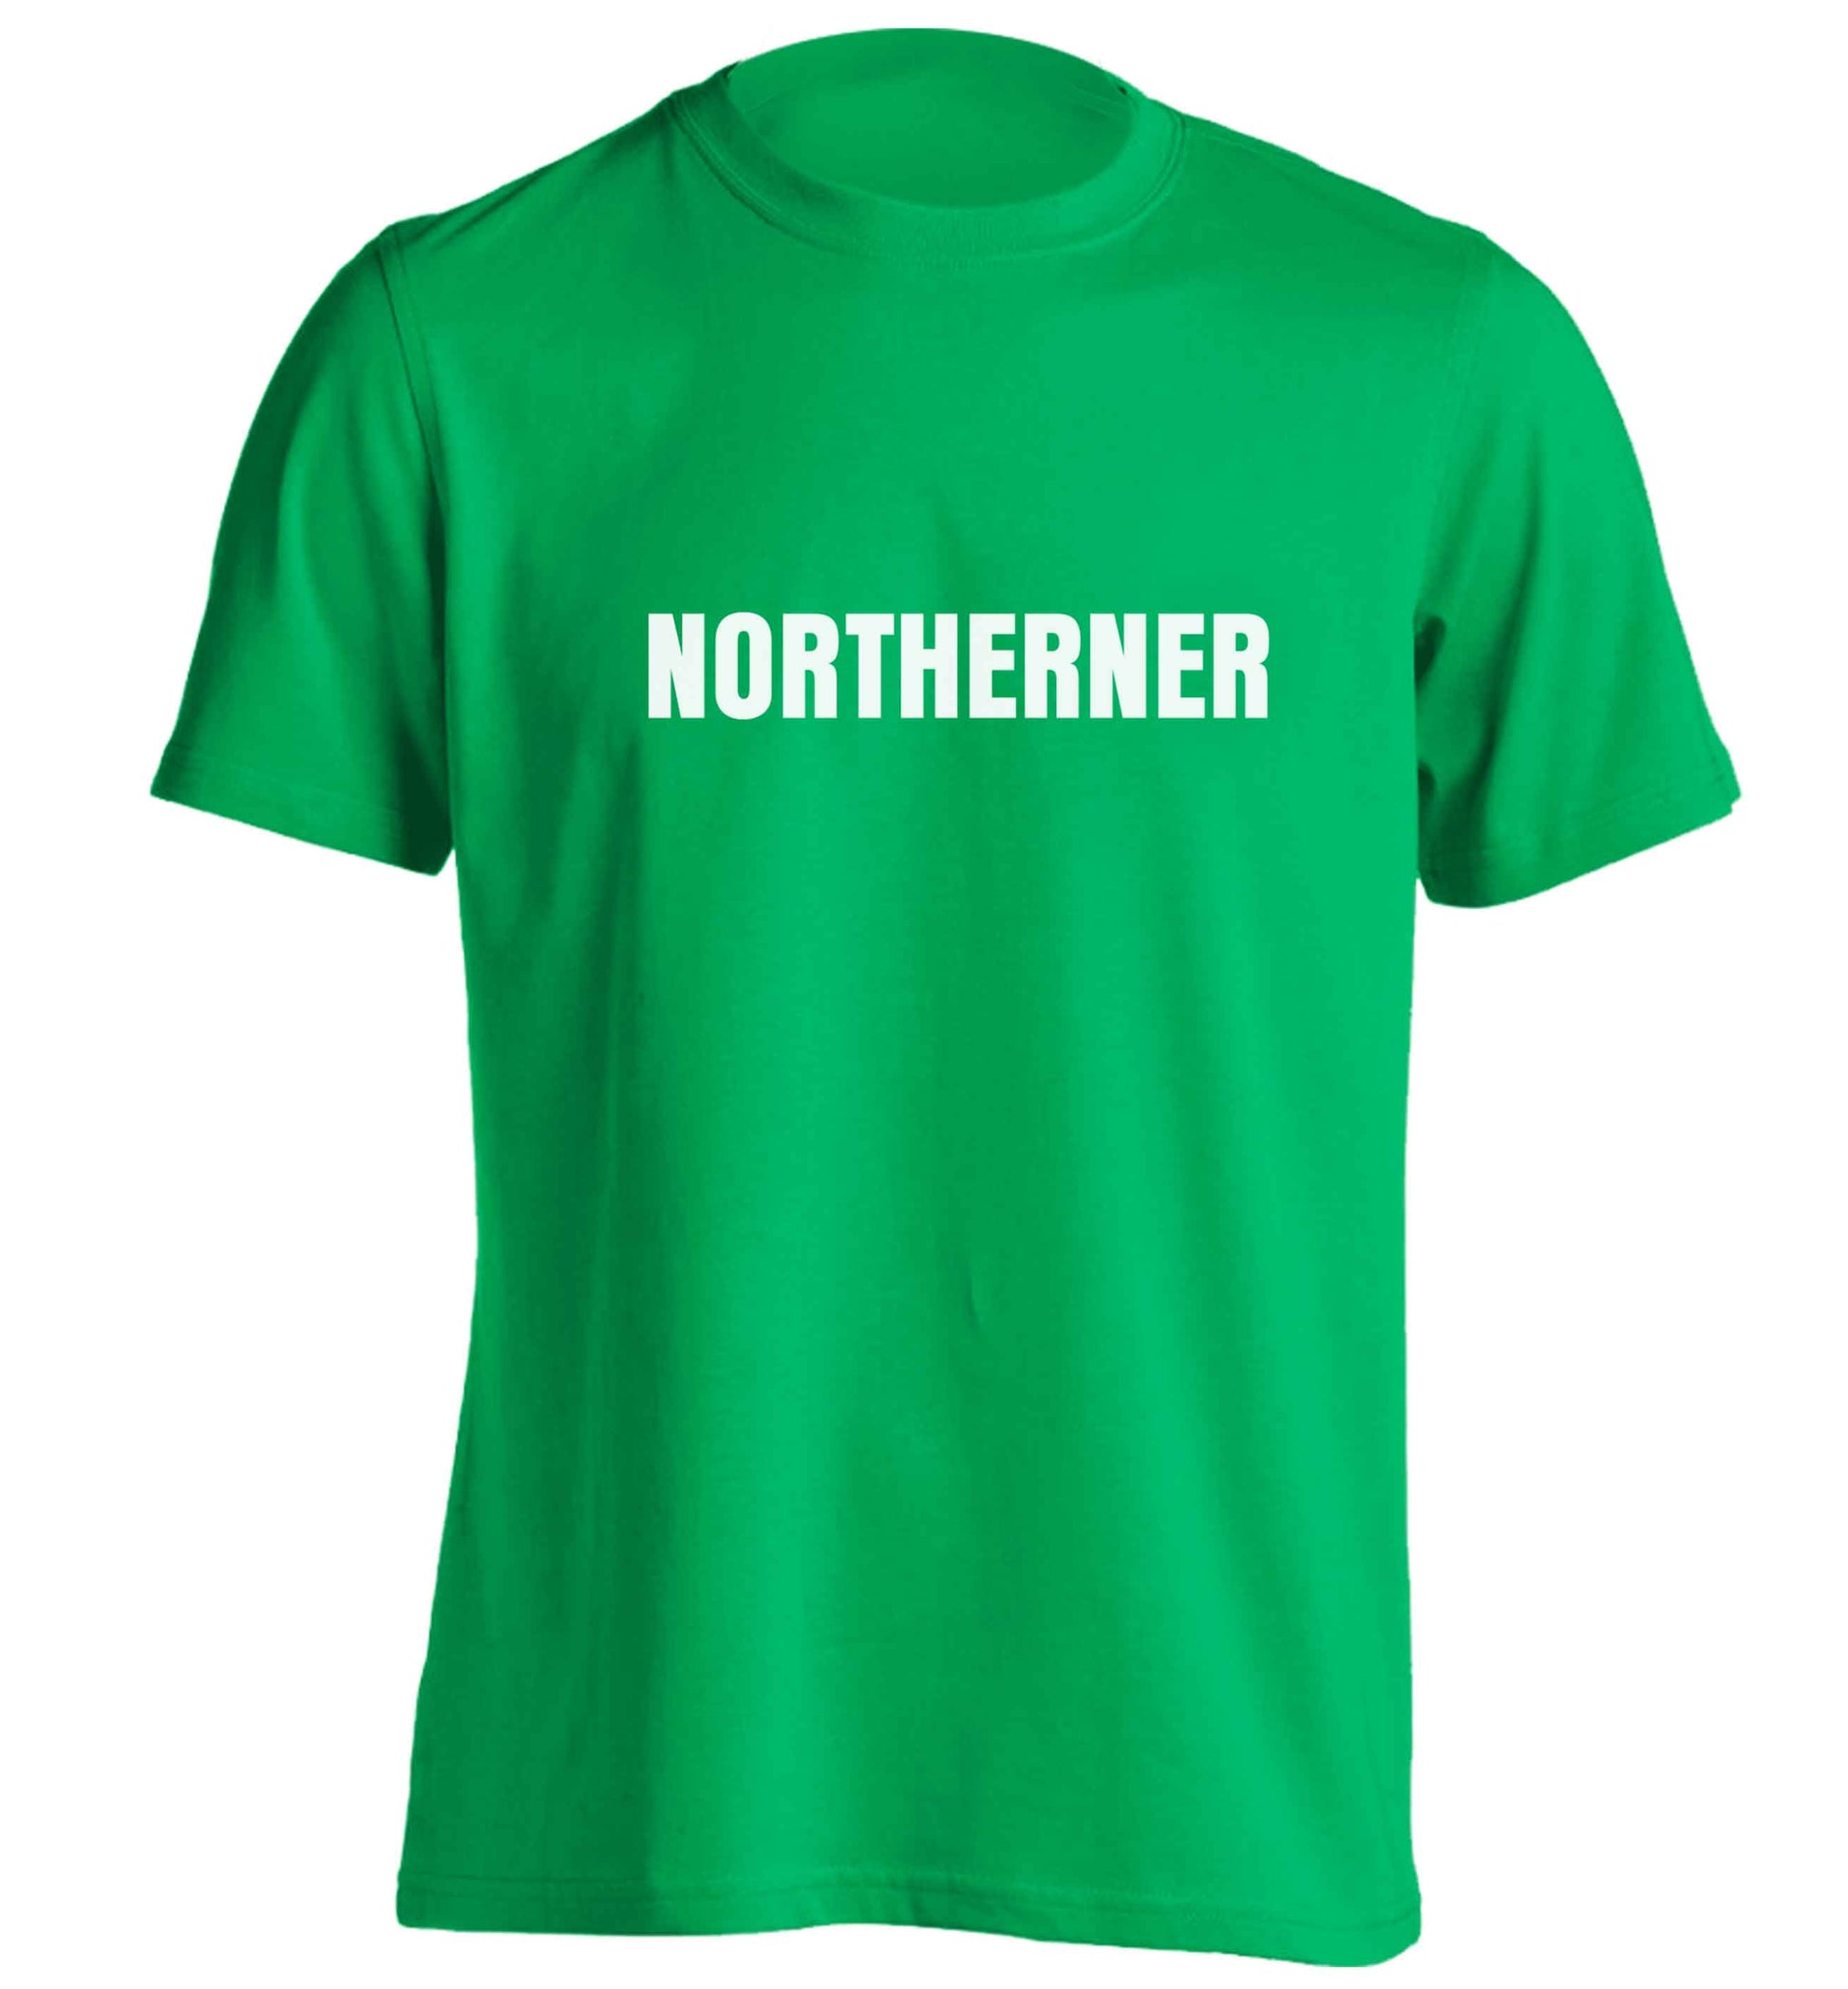 Northerner adults unisex green Tshirt 2XL